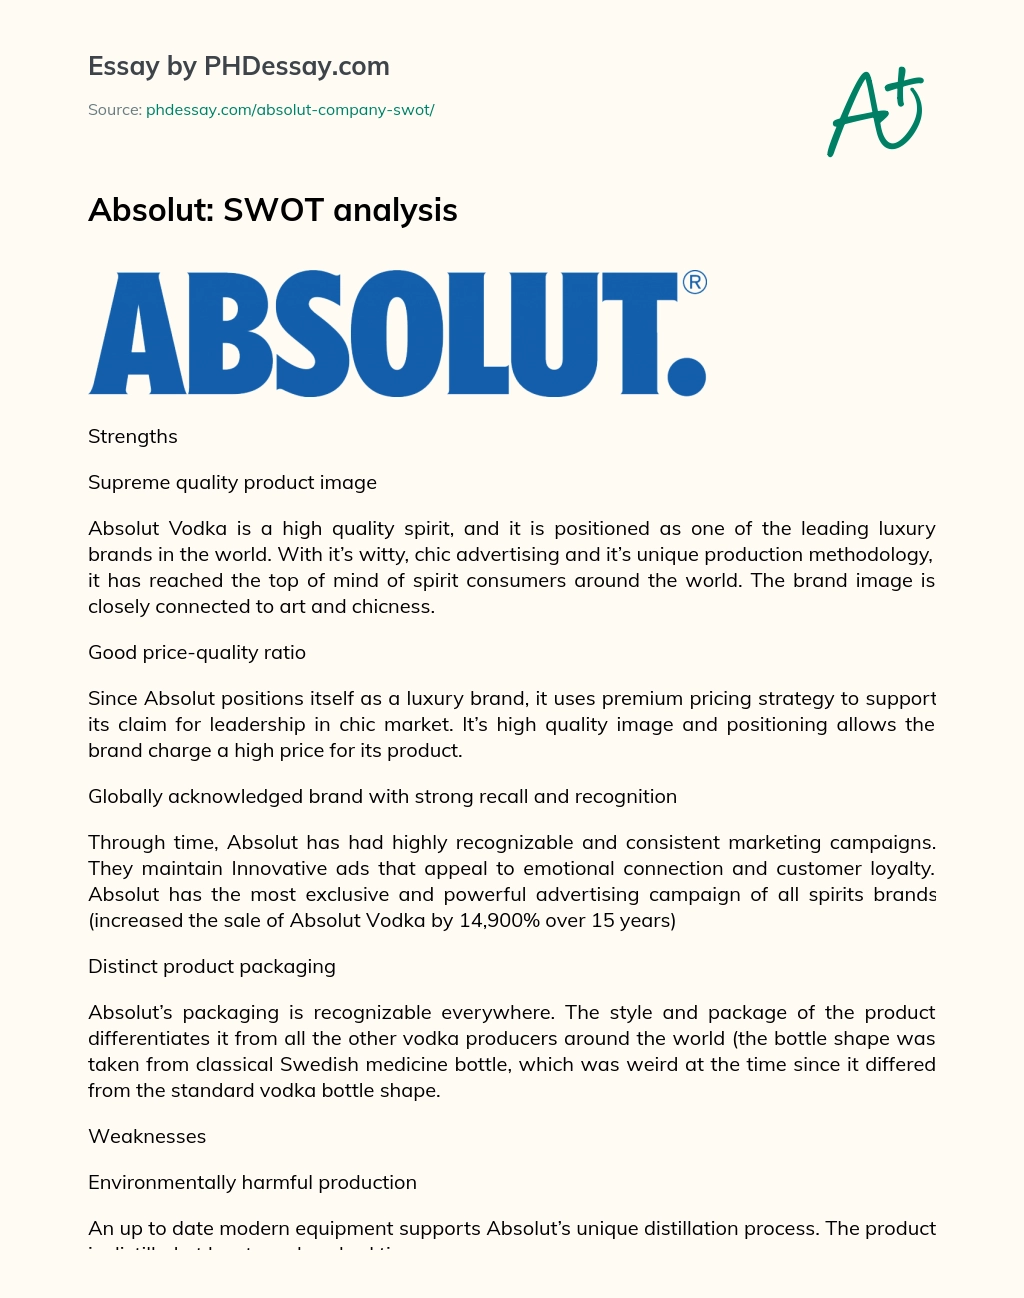 Absolut: SWOT analysis essay